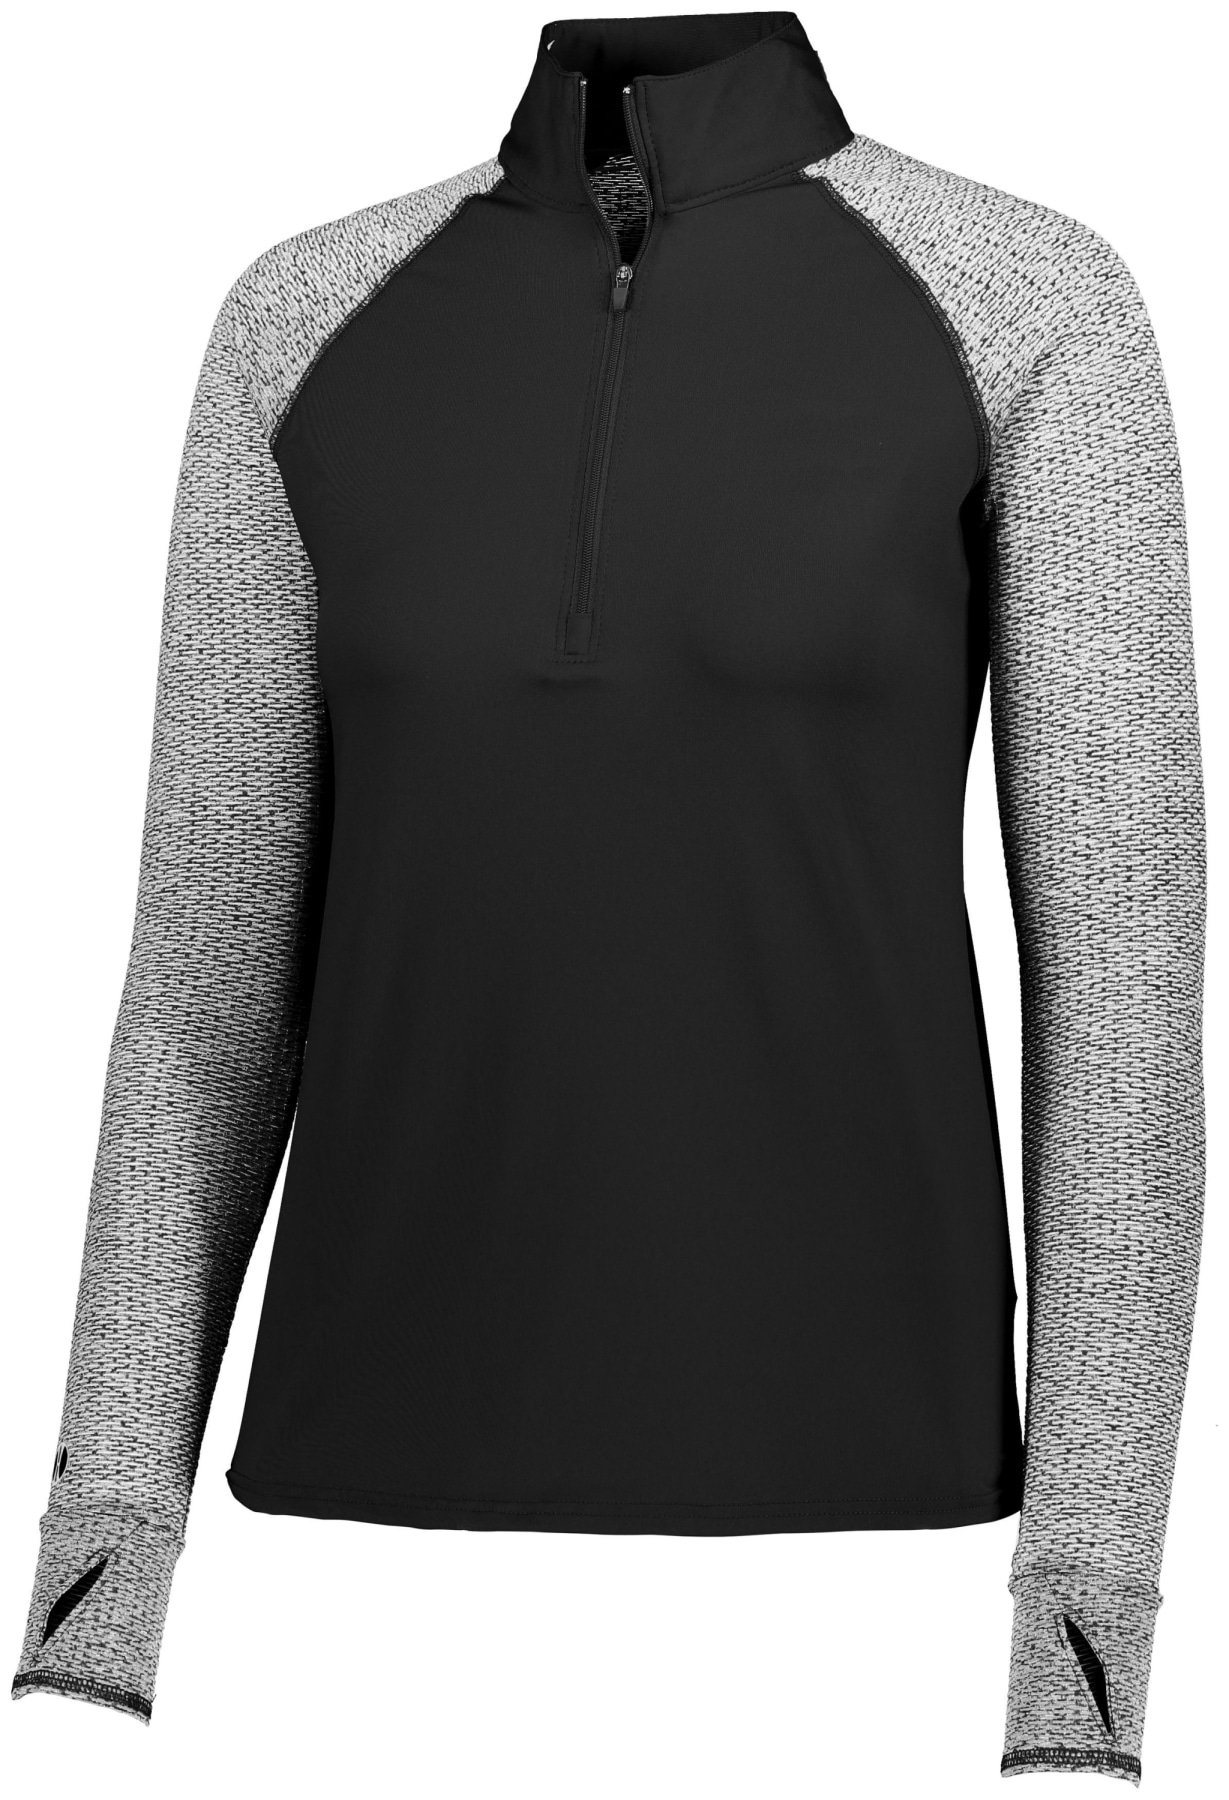 Ladies Athletic Shirt, Long Sleeve Axis 1/2 Zip Pullover 47